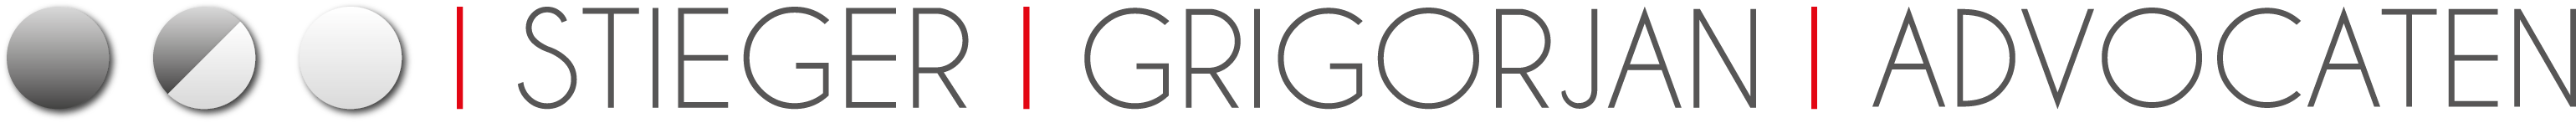 Stieger Grigorjan Advocaten Logo